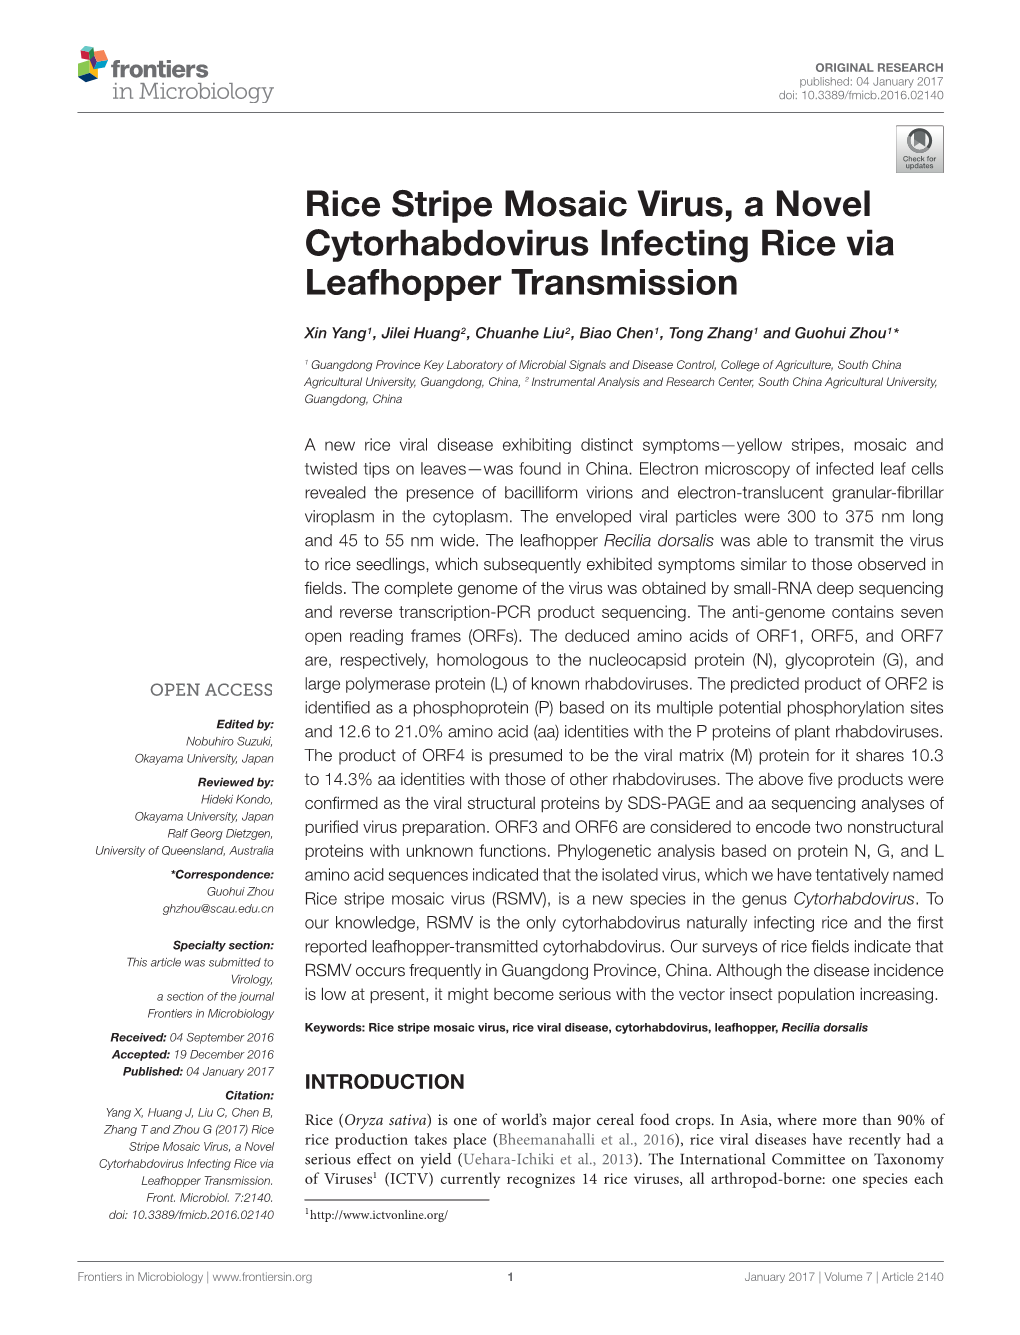 Rice Stripe Mosaic Virus, a Novel Cytorhabdovirus Infecting Rice Via Leafhopper Transmission